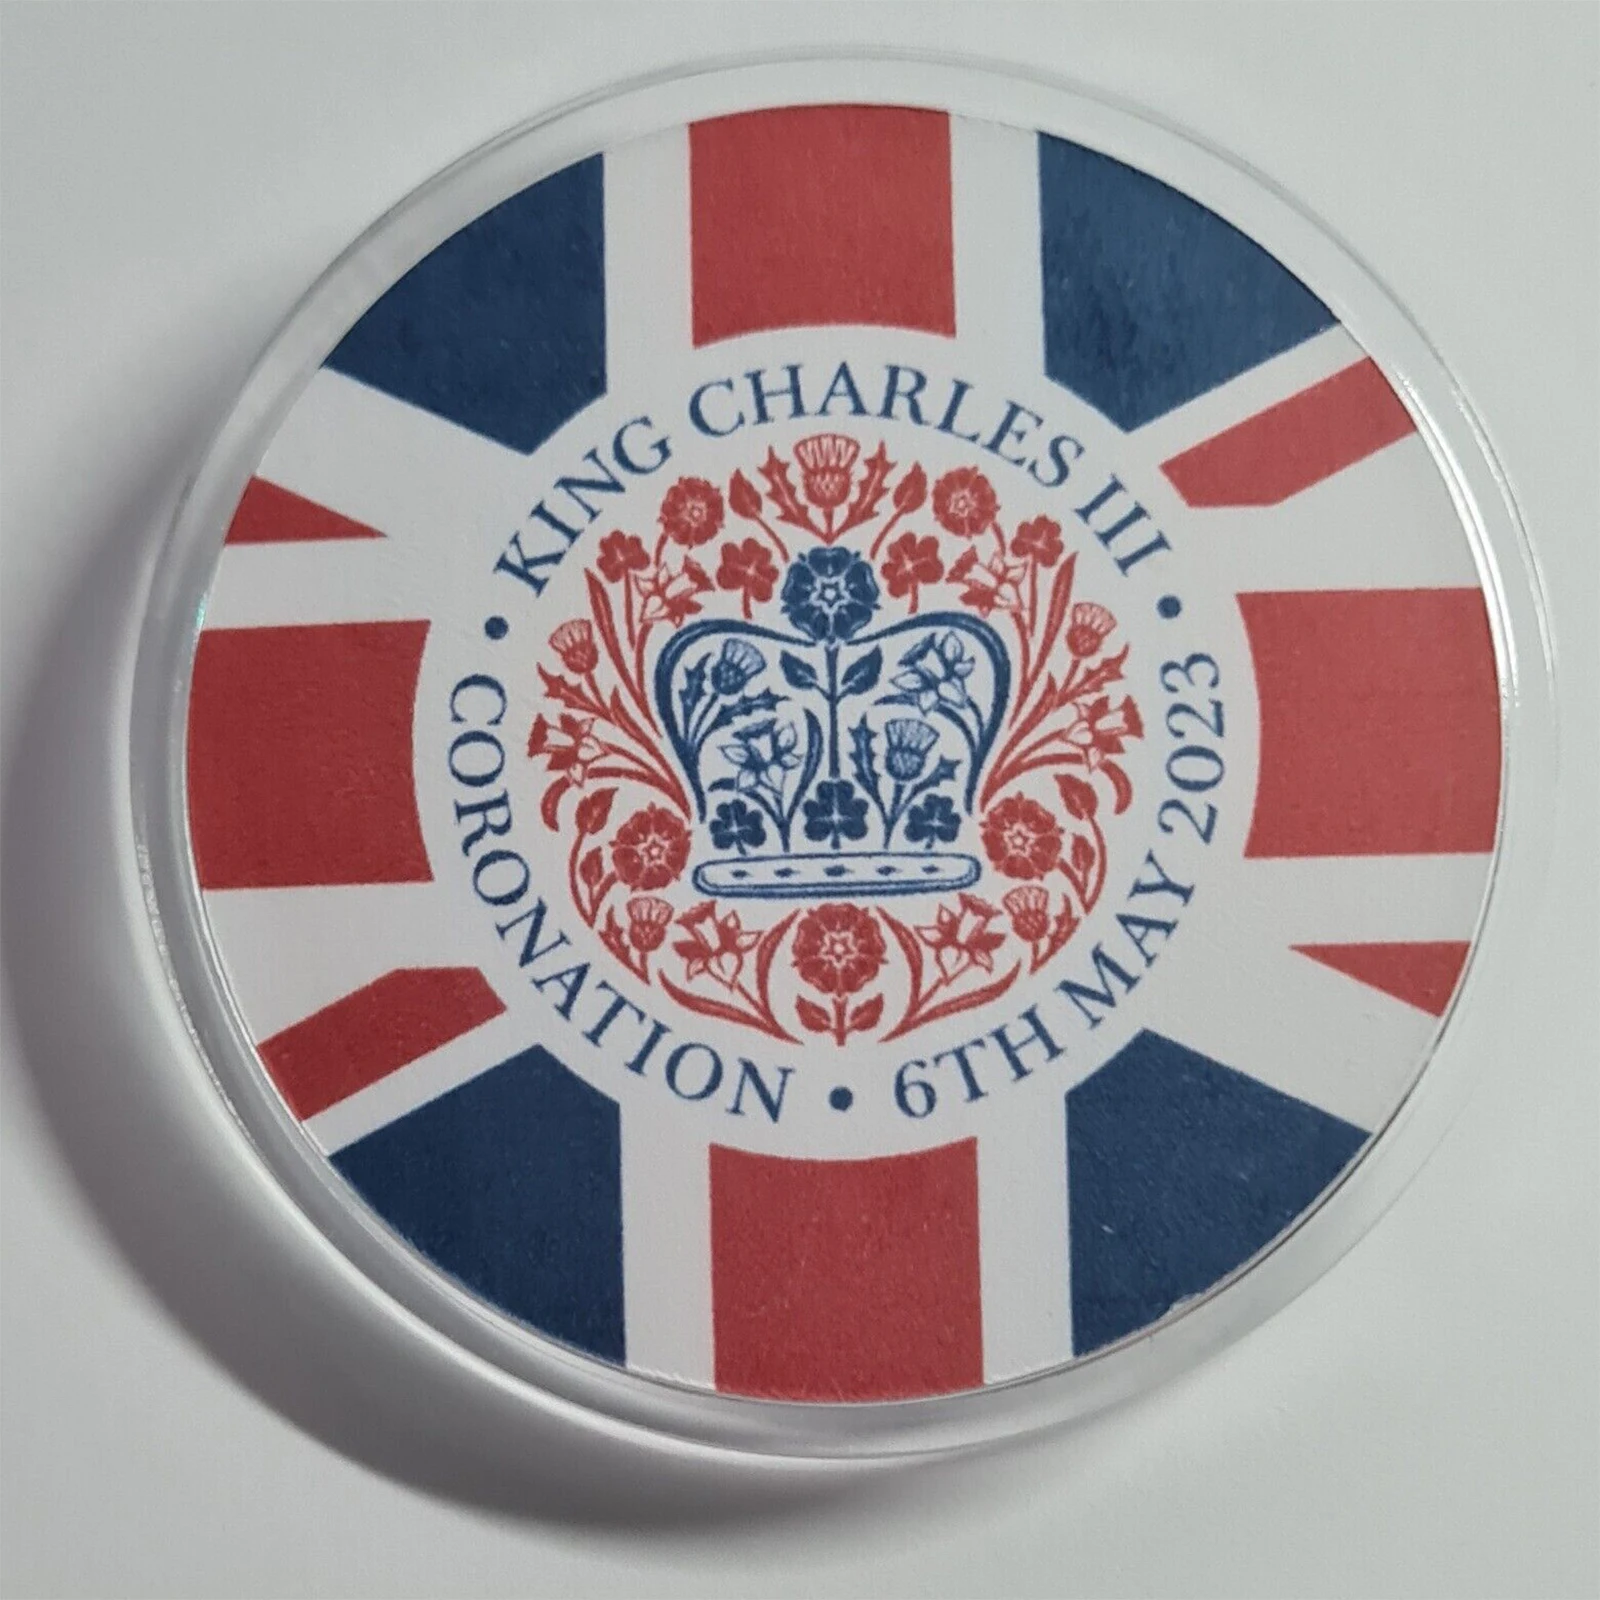 

Значок короля Чарльза из короля на булавке 6 мая. 2023